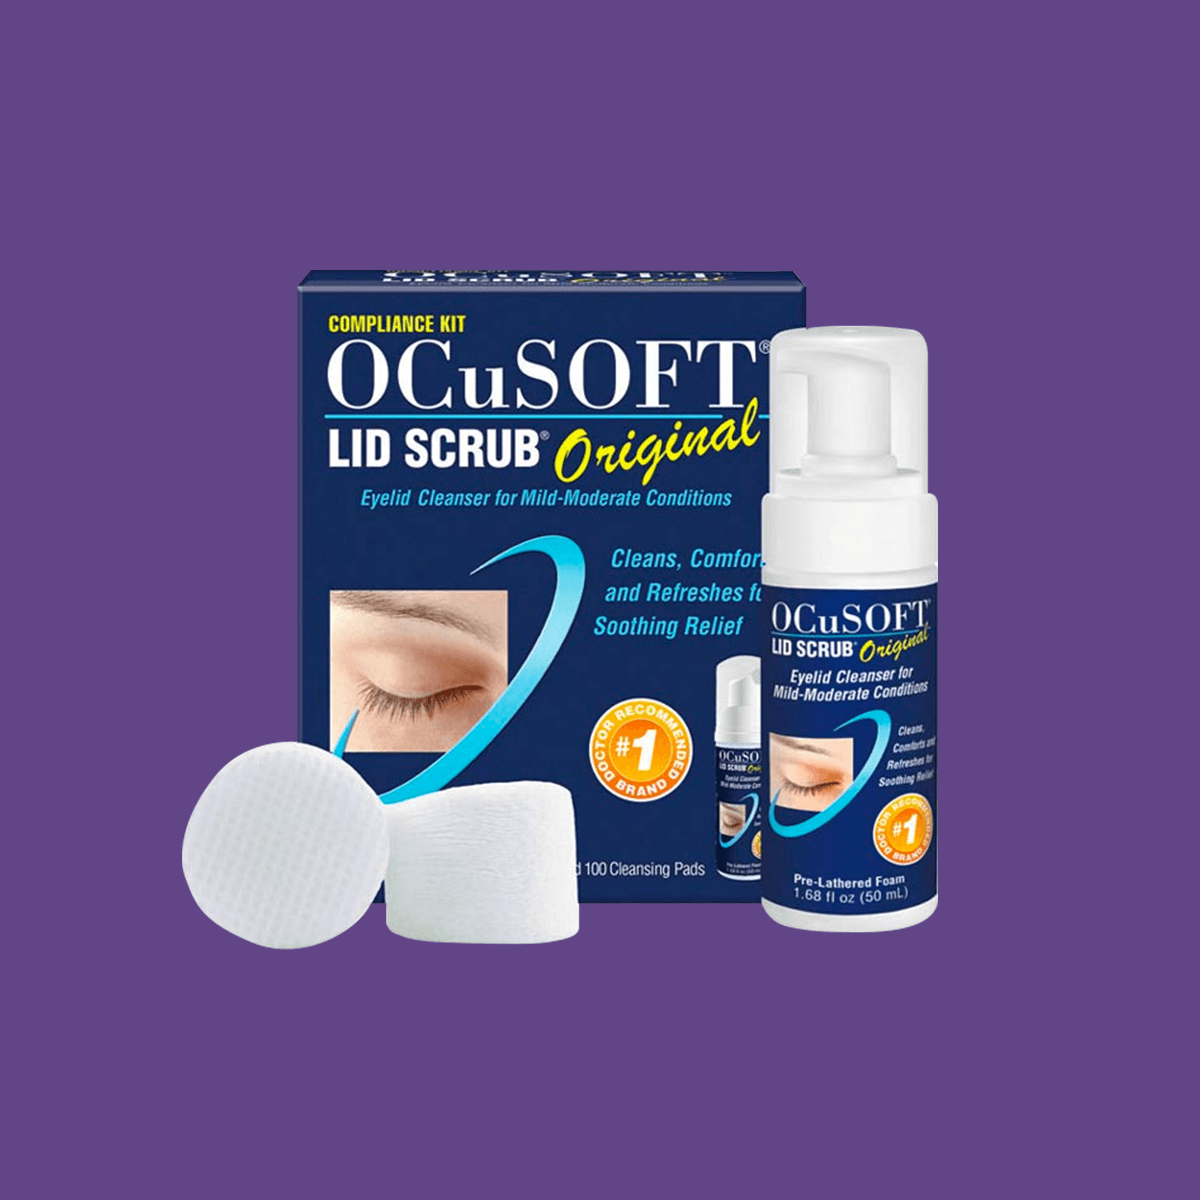 Ocusoft Lid Scrub Original Compliance Kit Foam and Wipes - DryEye Rescue Store